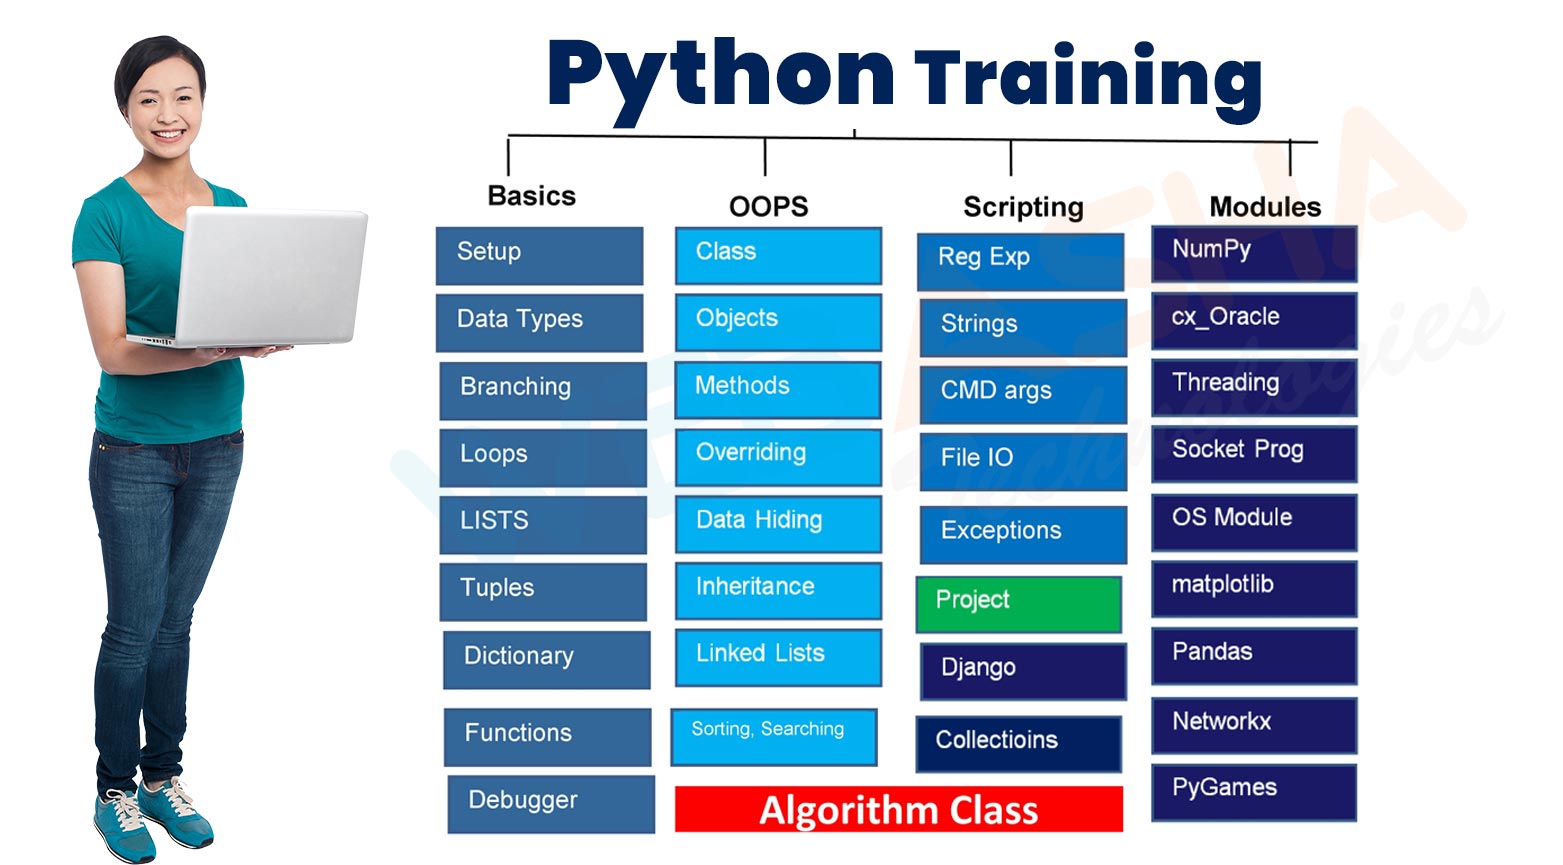 [Image: 65db342d07c8f1708864557.python-training-course.jpg]